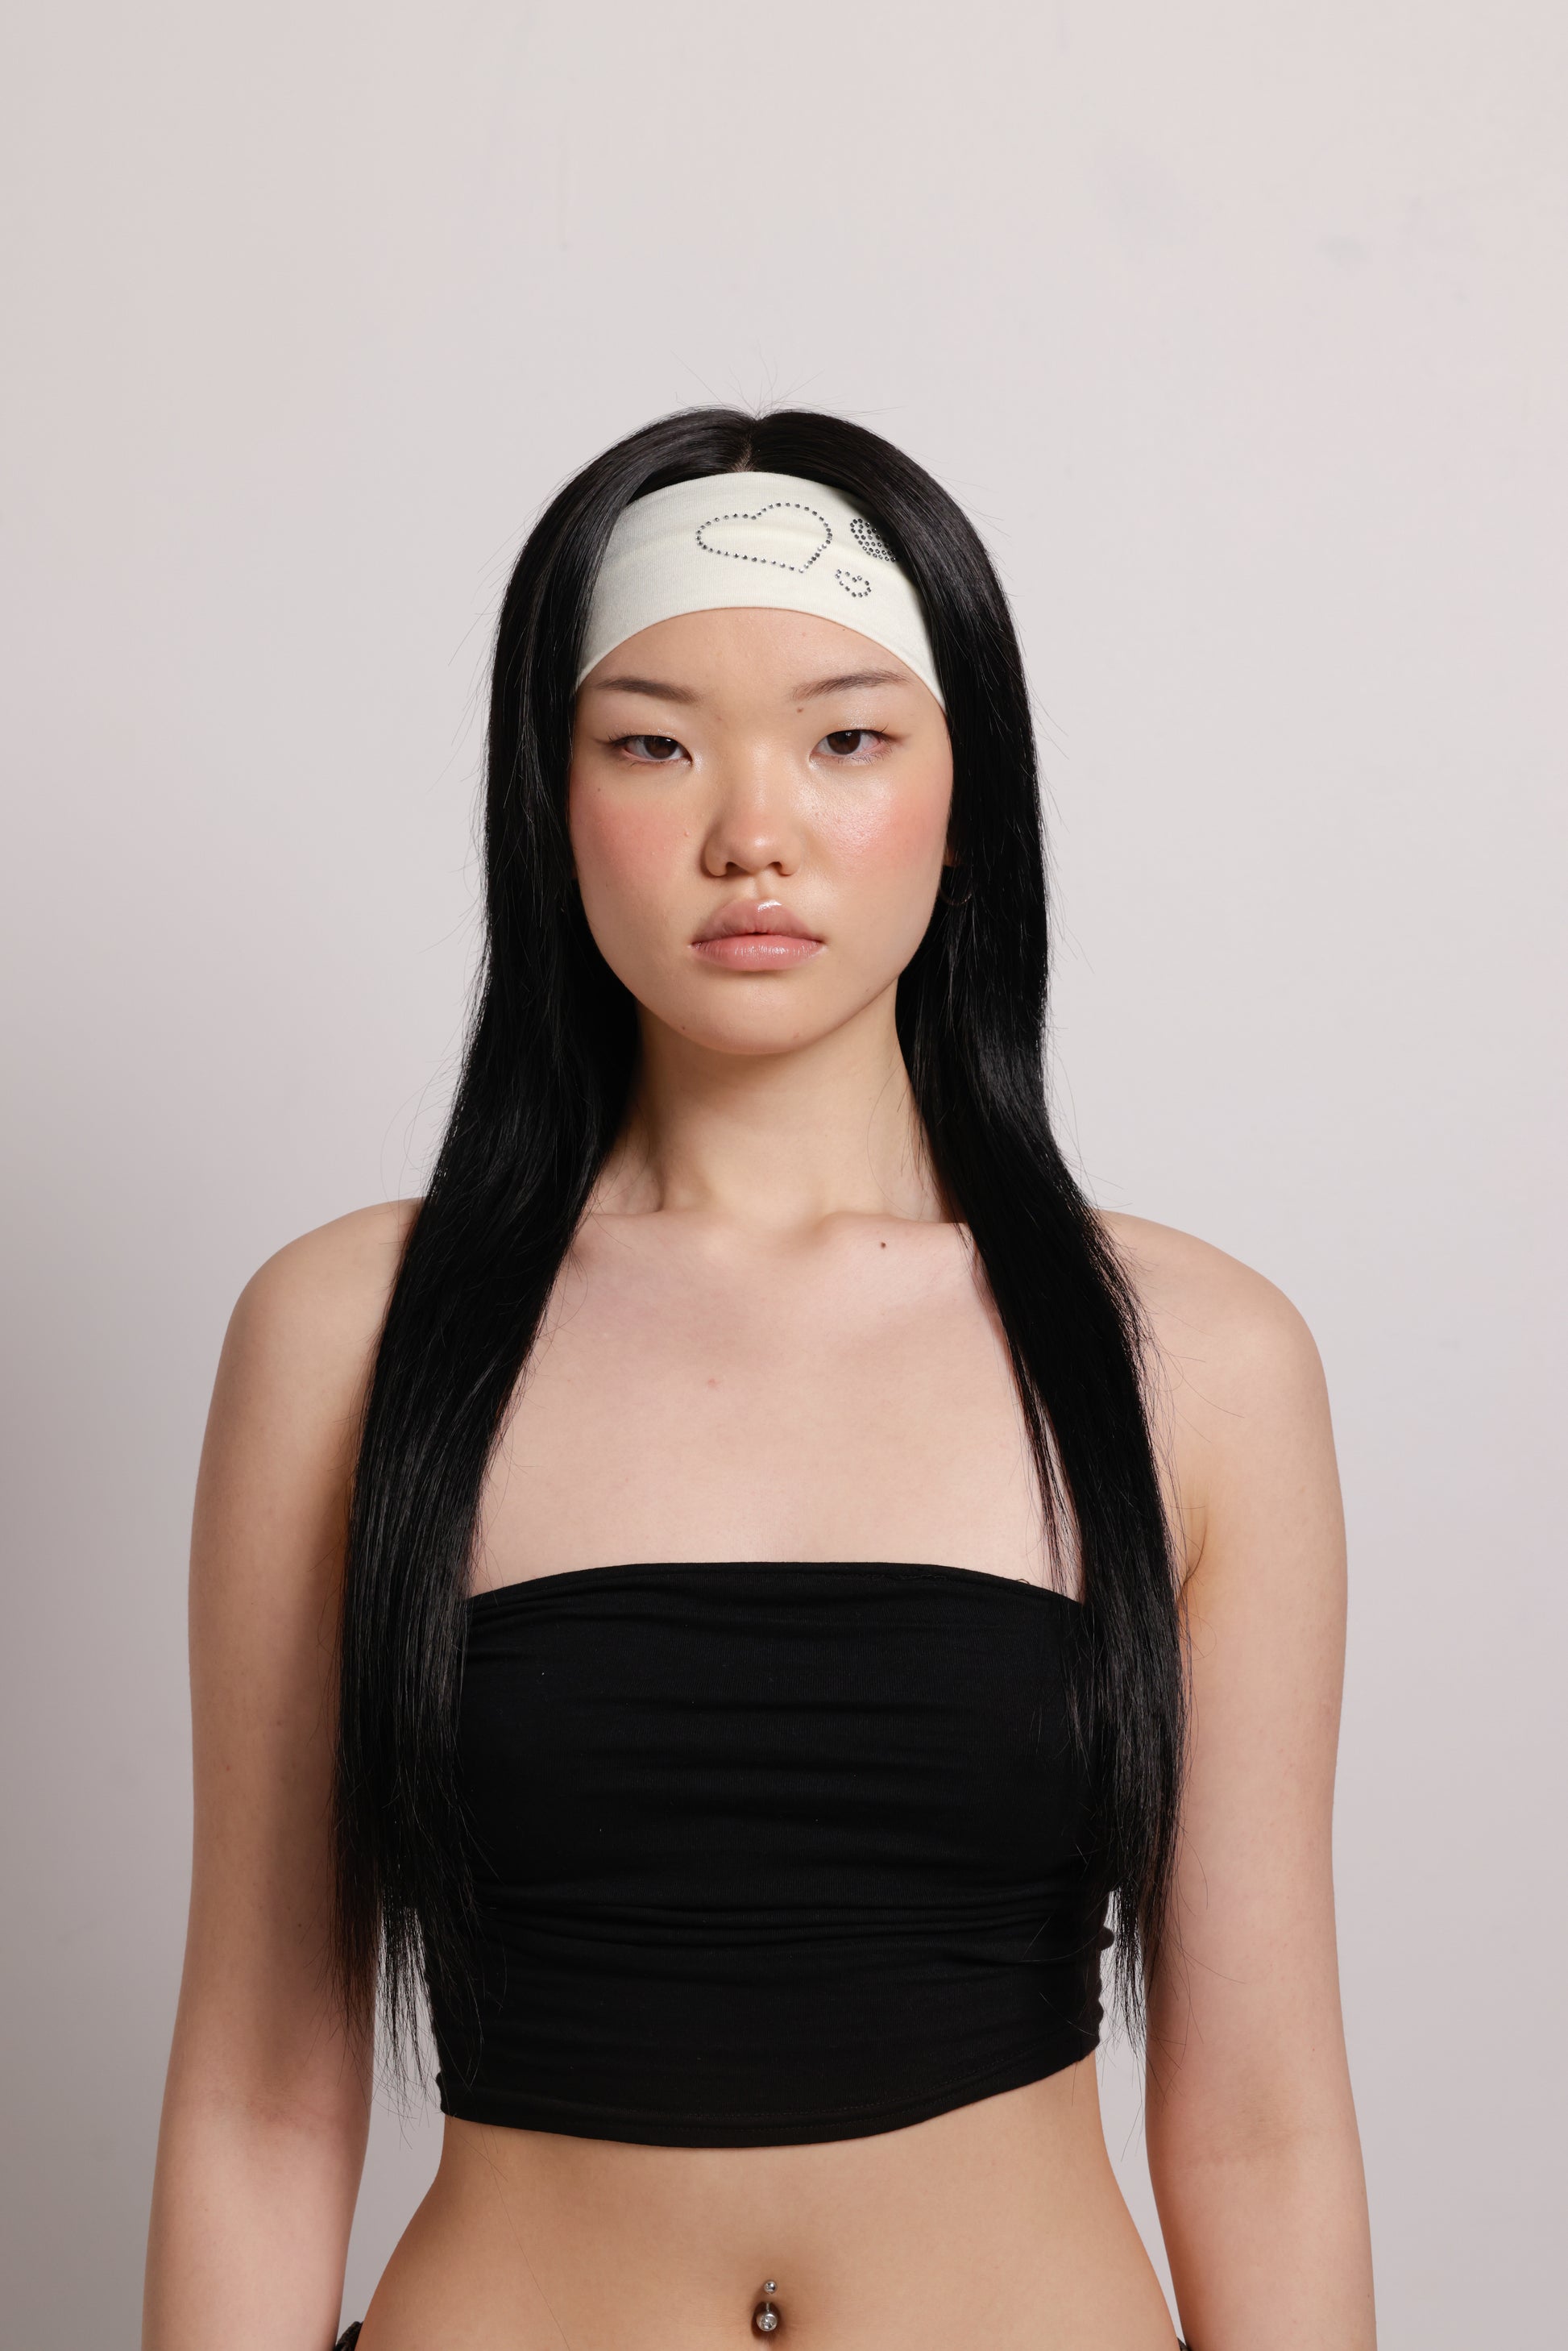 girl wearing white headband with silver diamonte